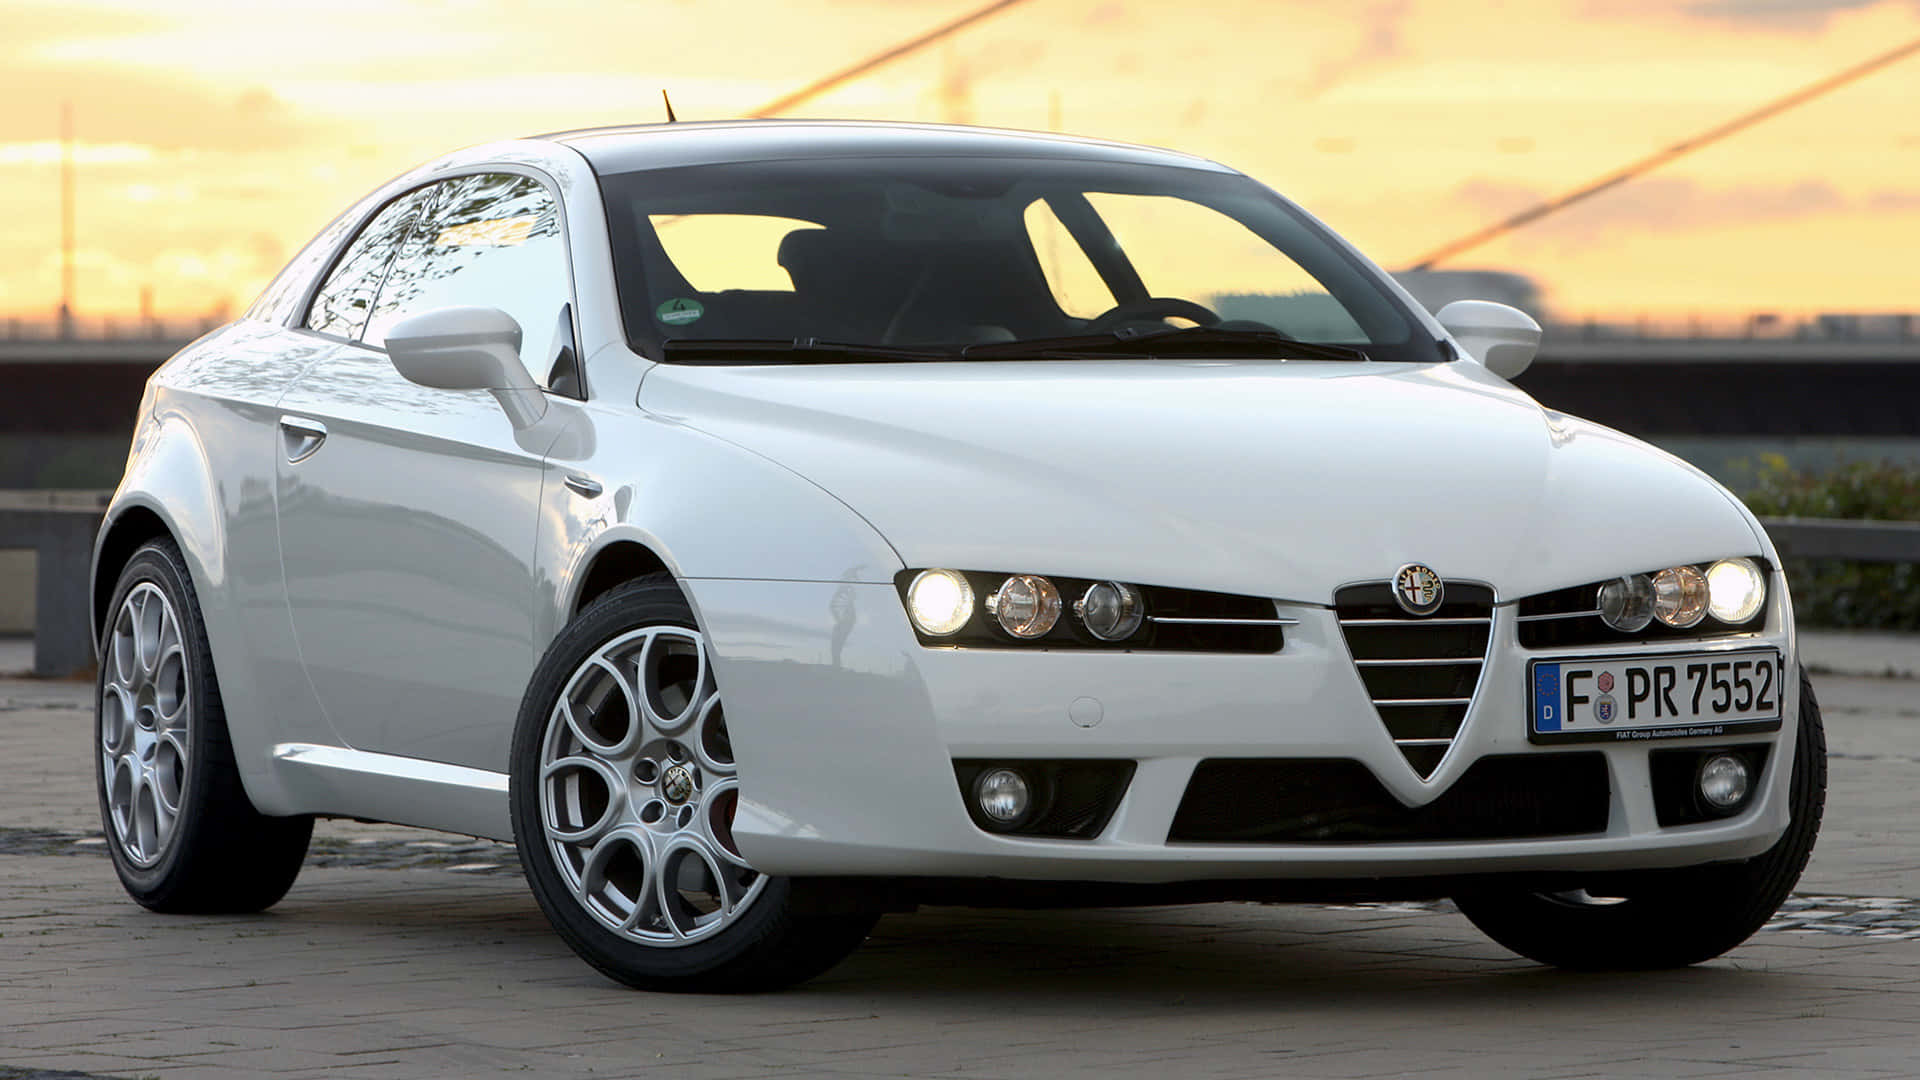 Sleek Alfa Romeo Brera on a scenic backdrop Wallpaper